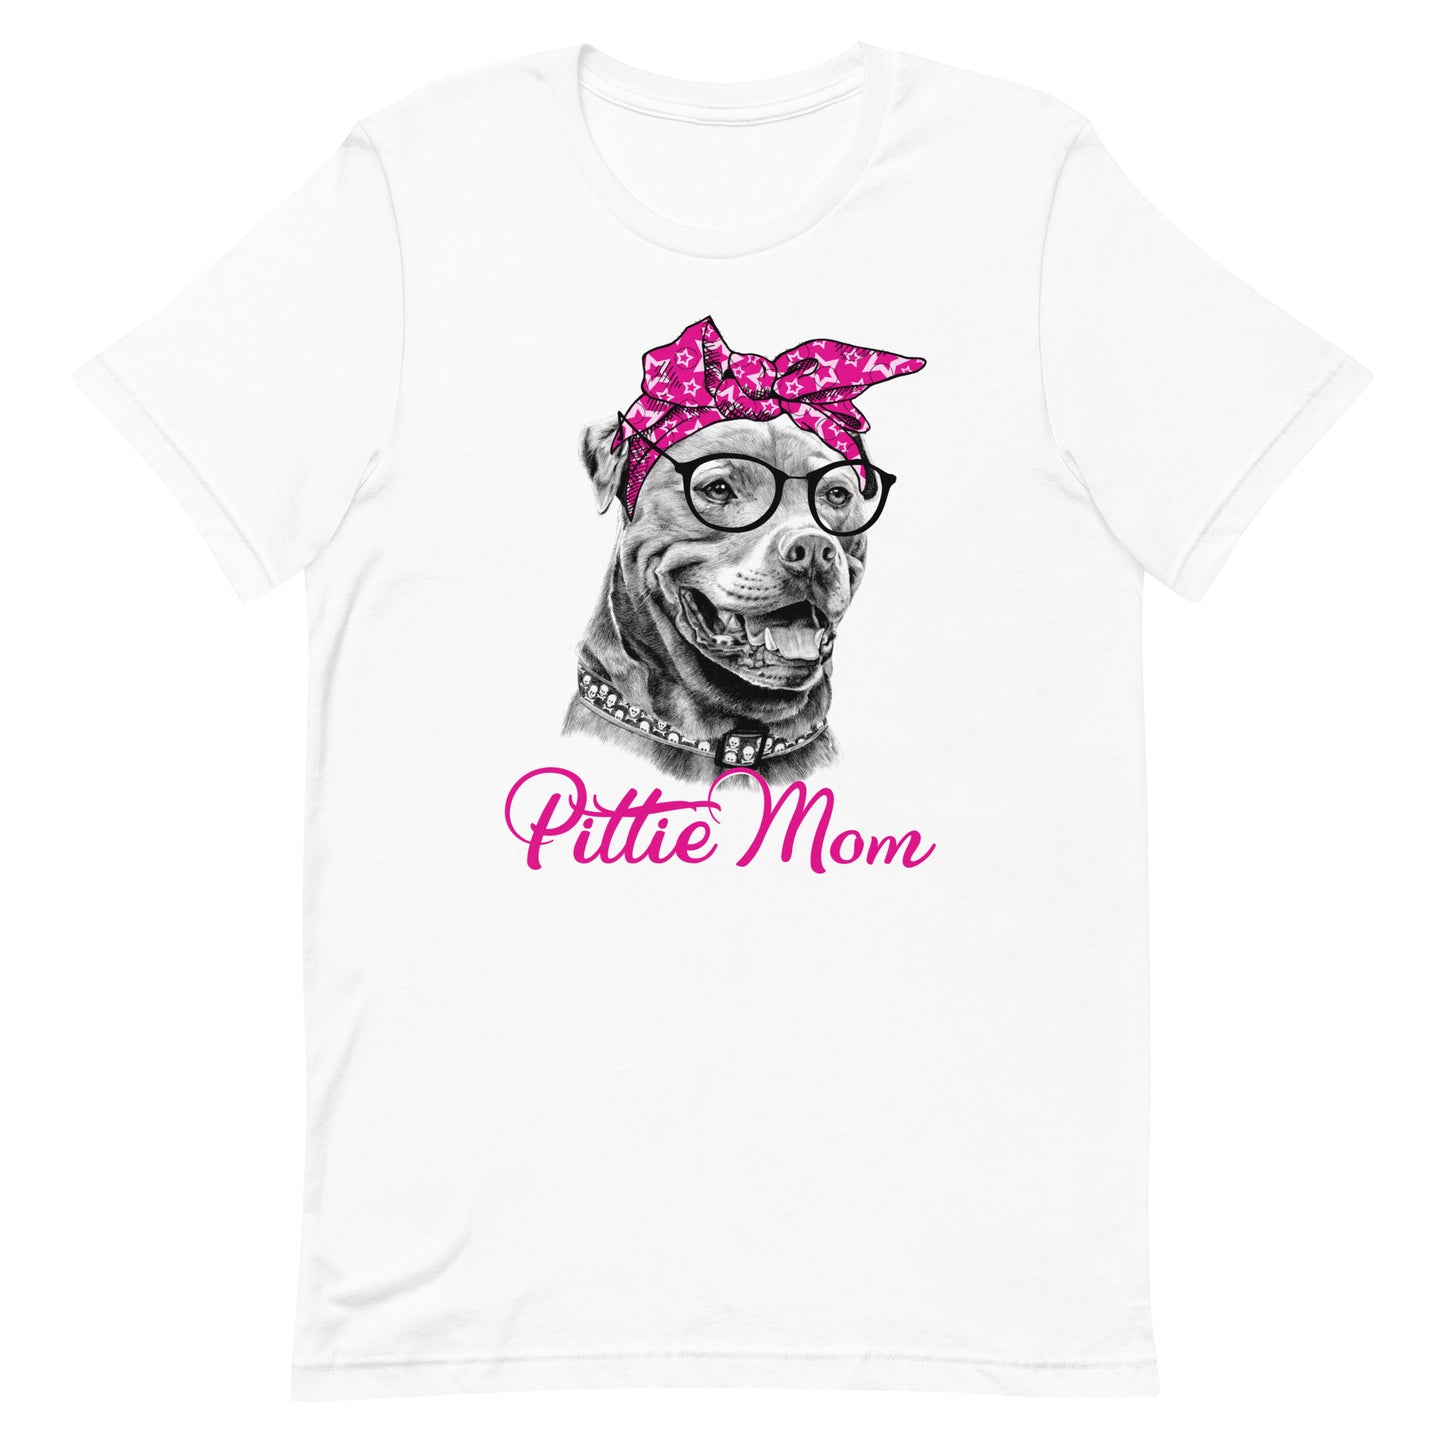 Pittie Mom - Pitbull Dog Mom T-Shirt